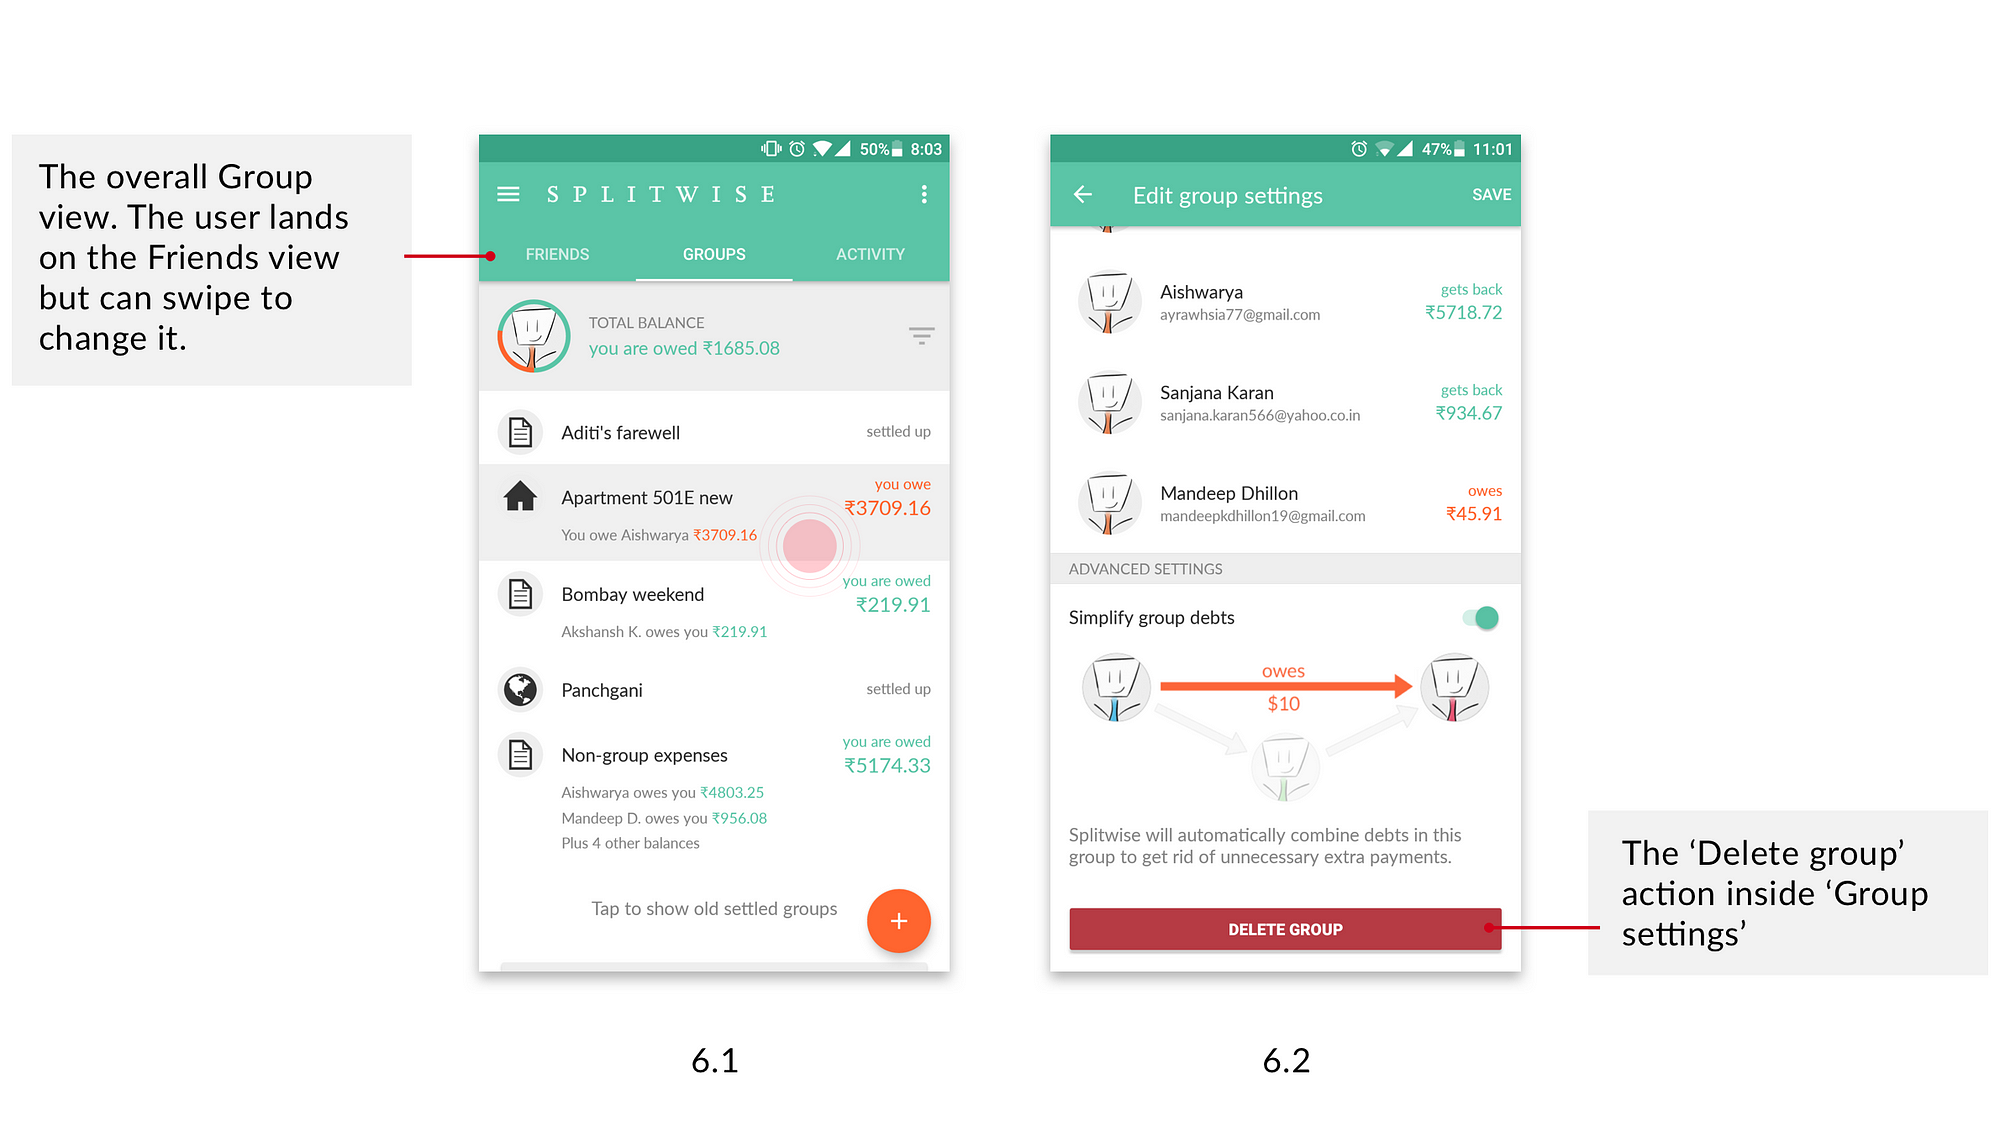 Interpersonal Finance App Splitwise Raises $20 Million Through